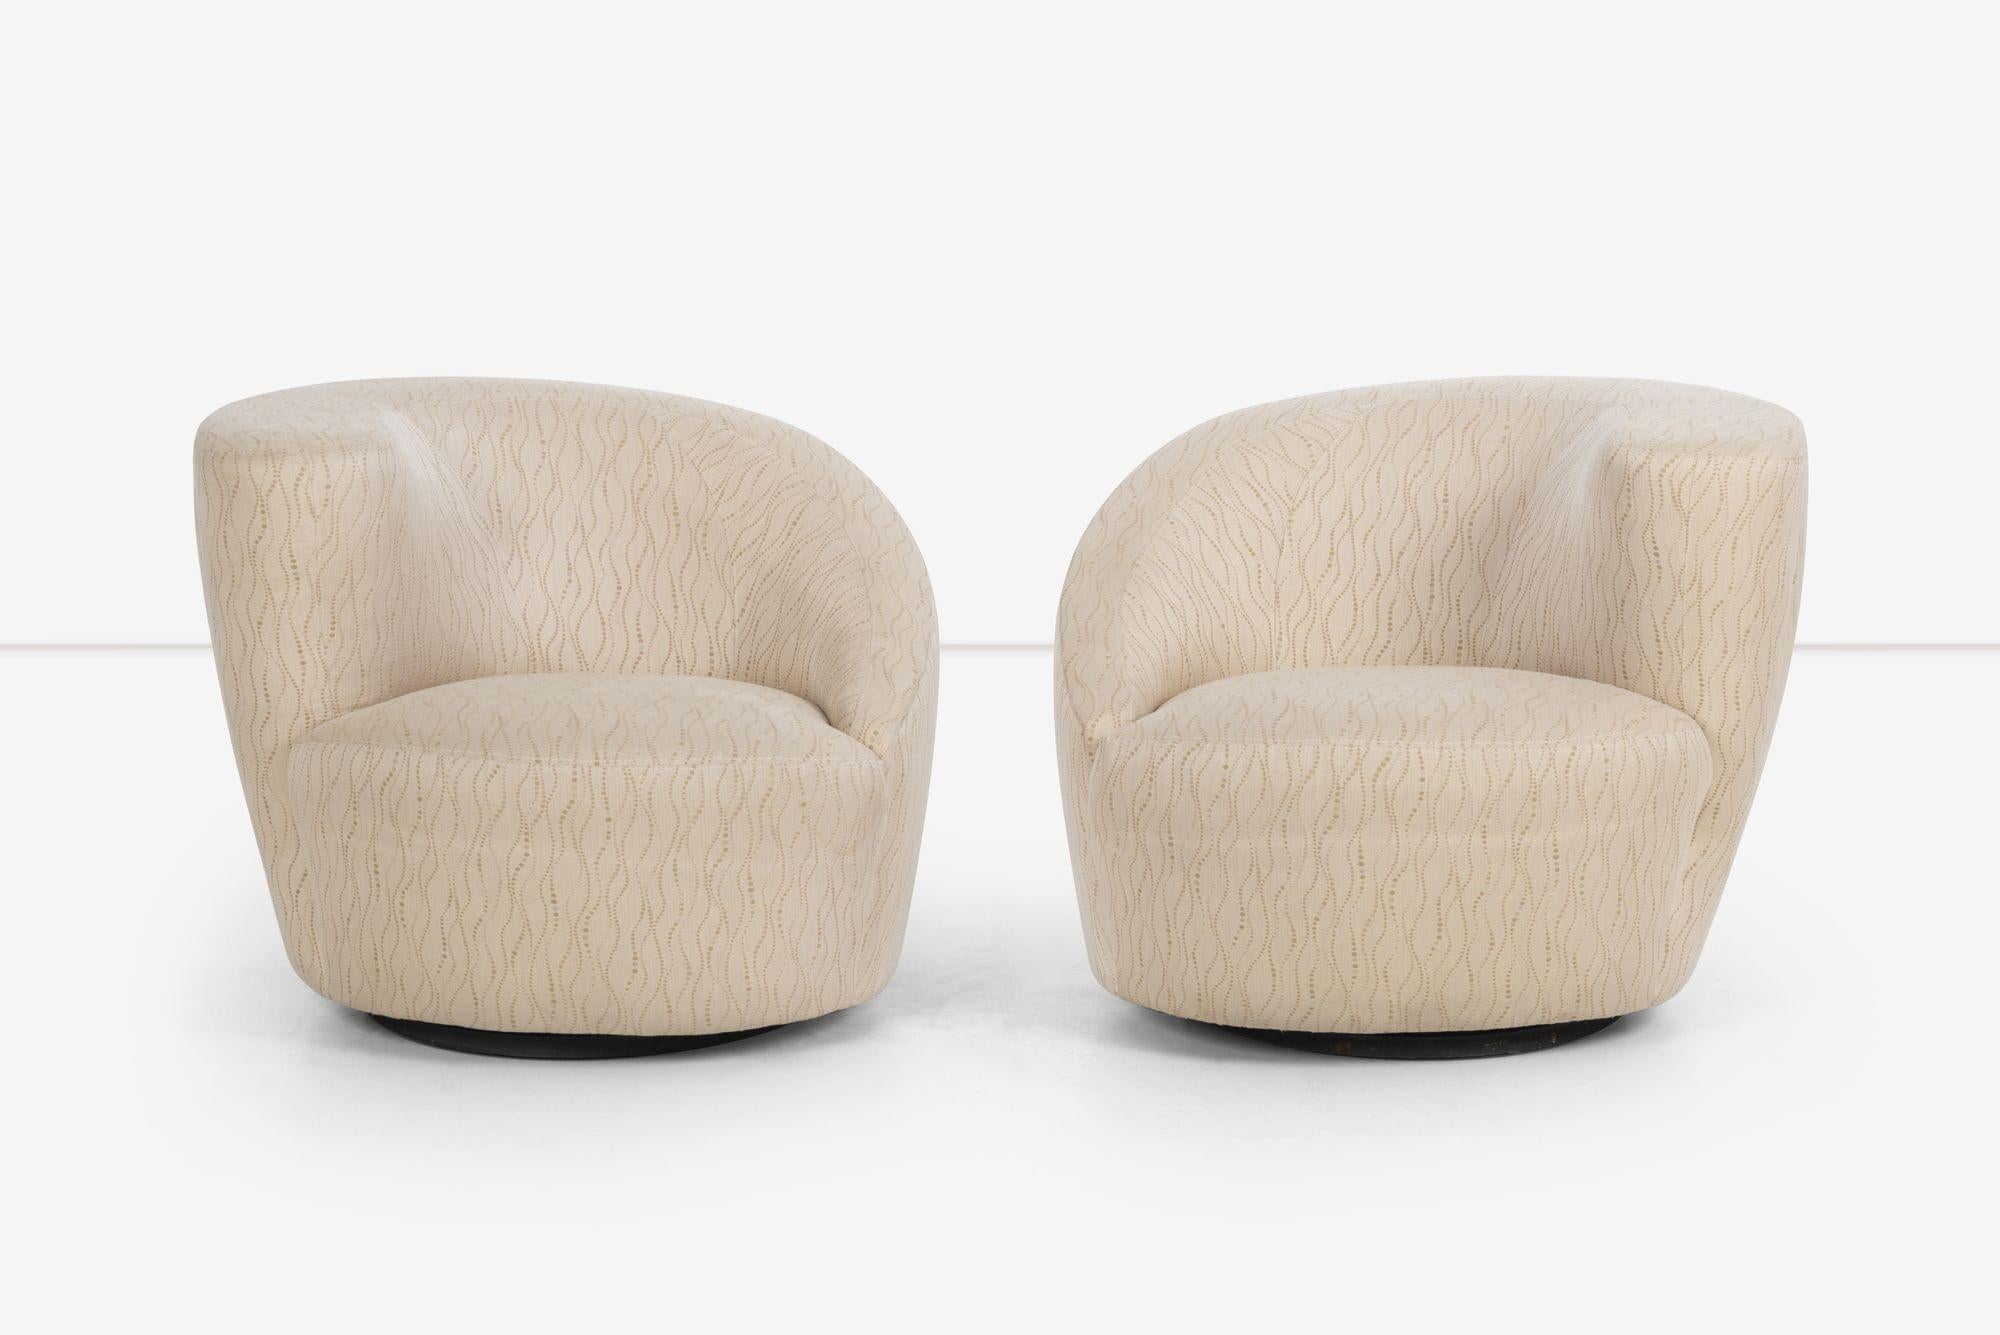 Nautilus Swivel chairs, Foe Directional original fabric, gently used.